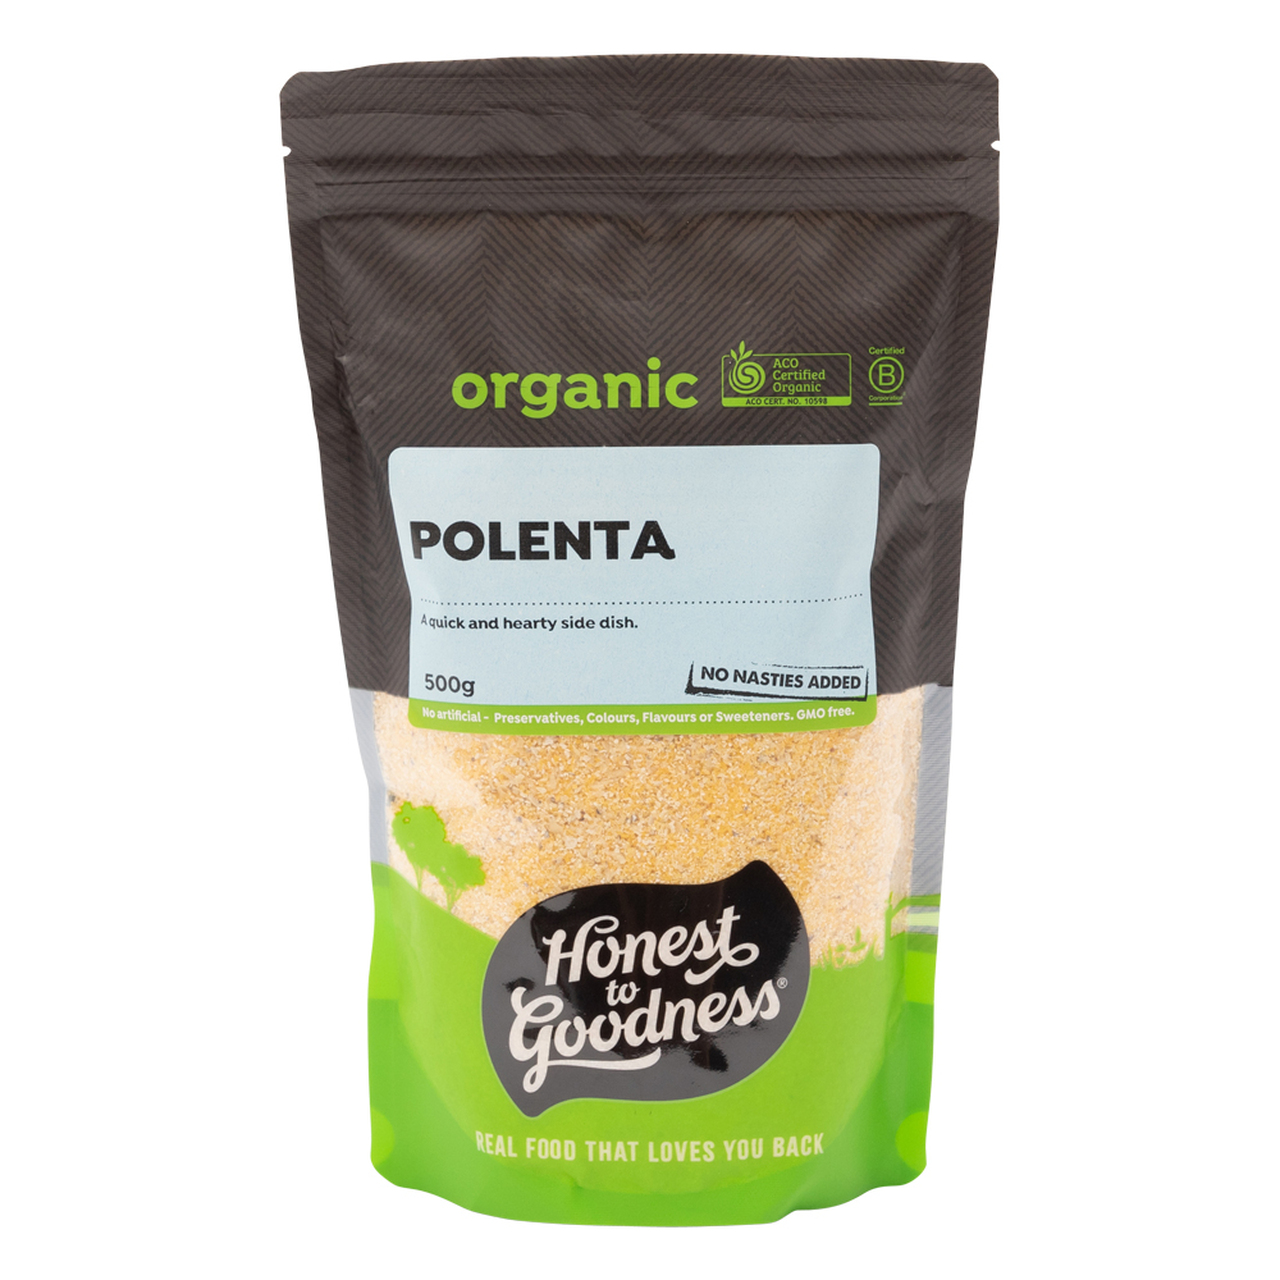 Polenta Goodness Certified Organic (500g)